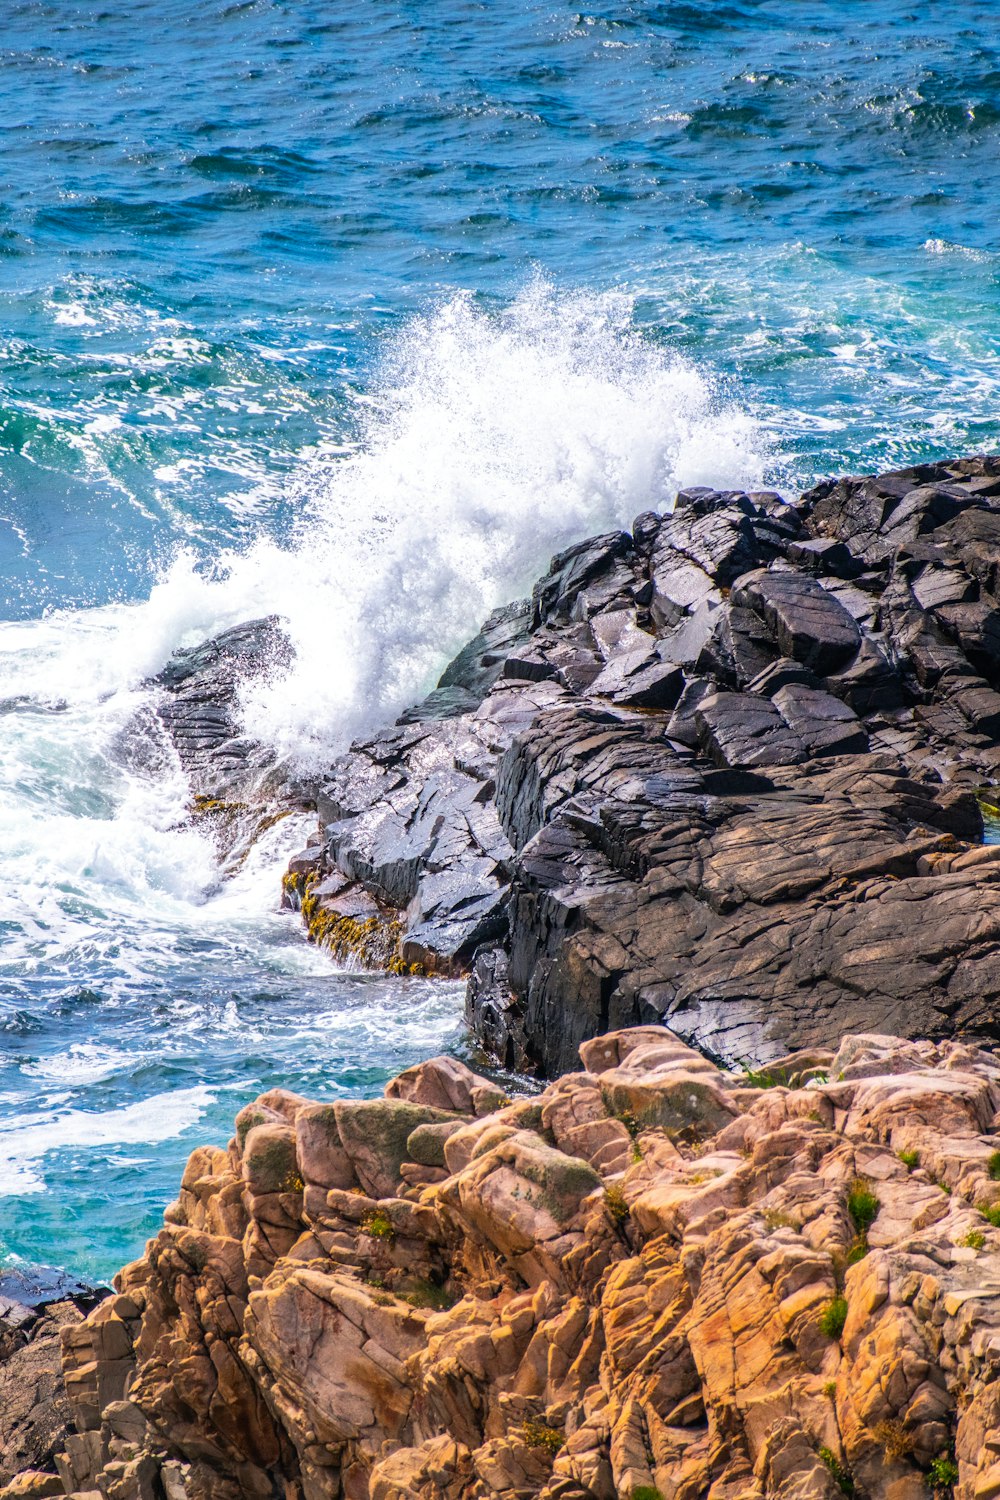 a rocky shoreline with waves crashing